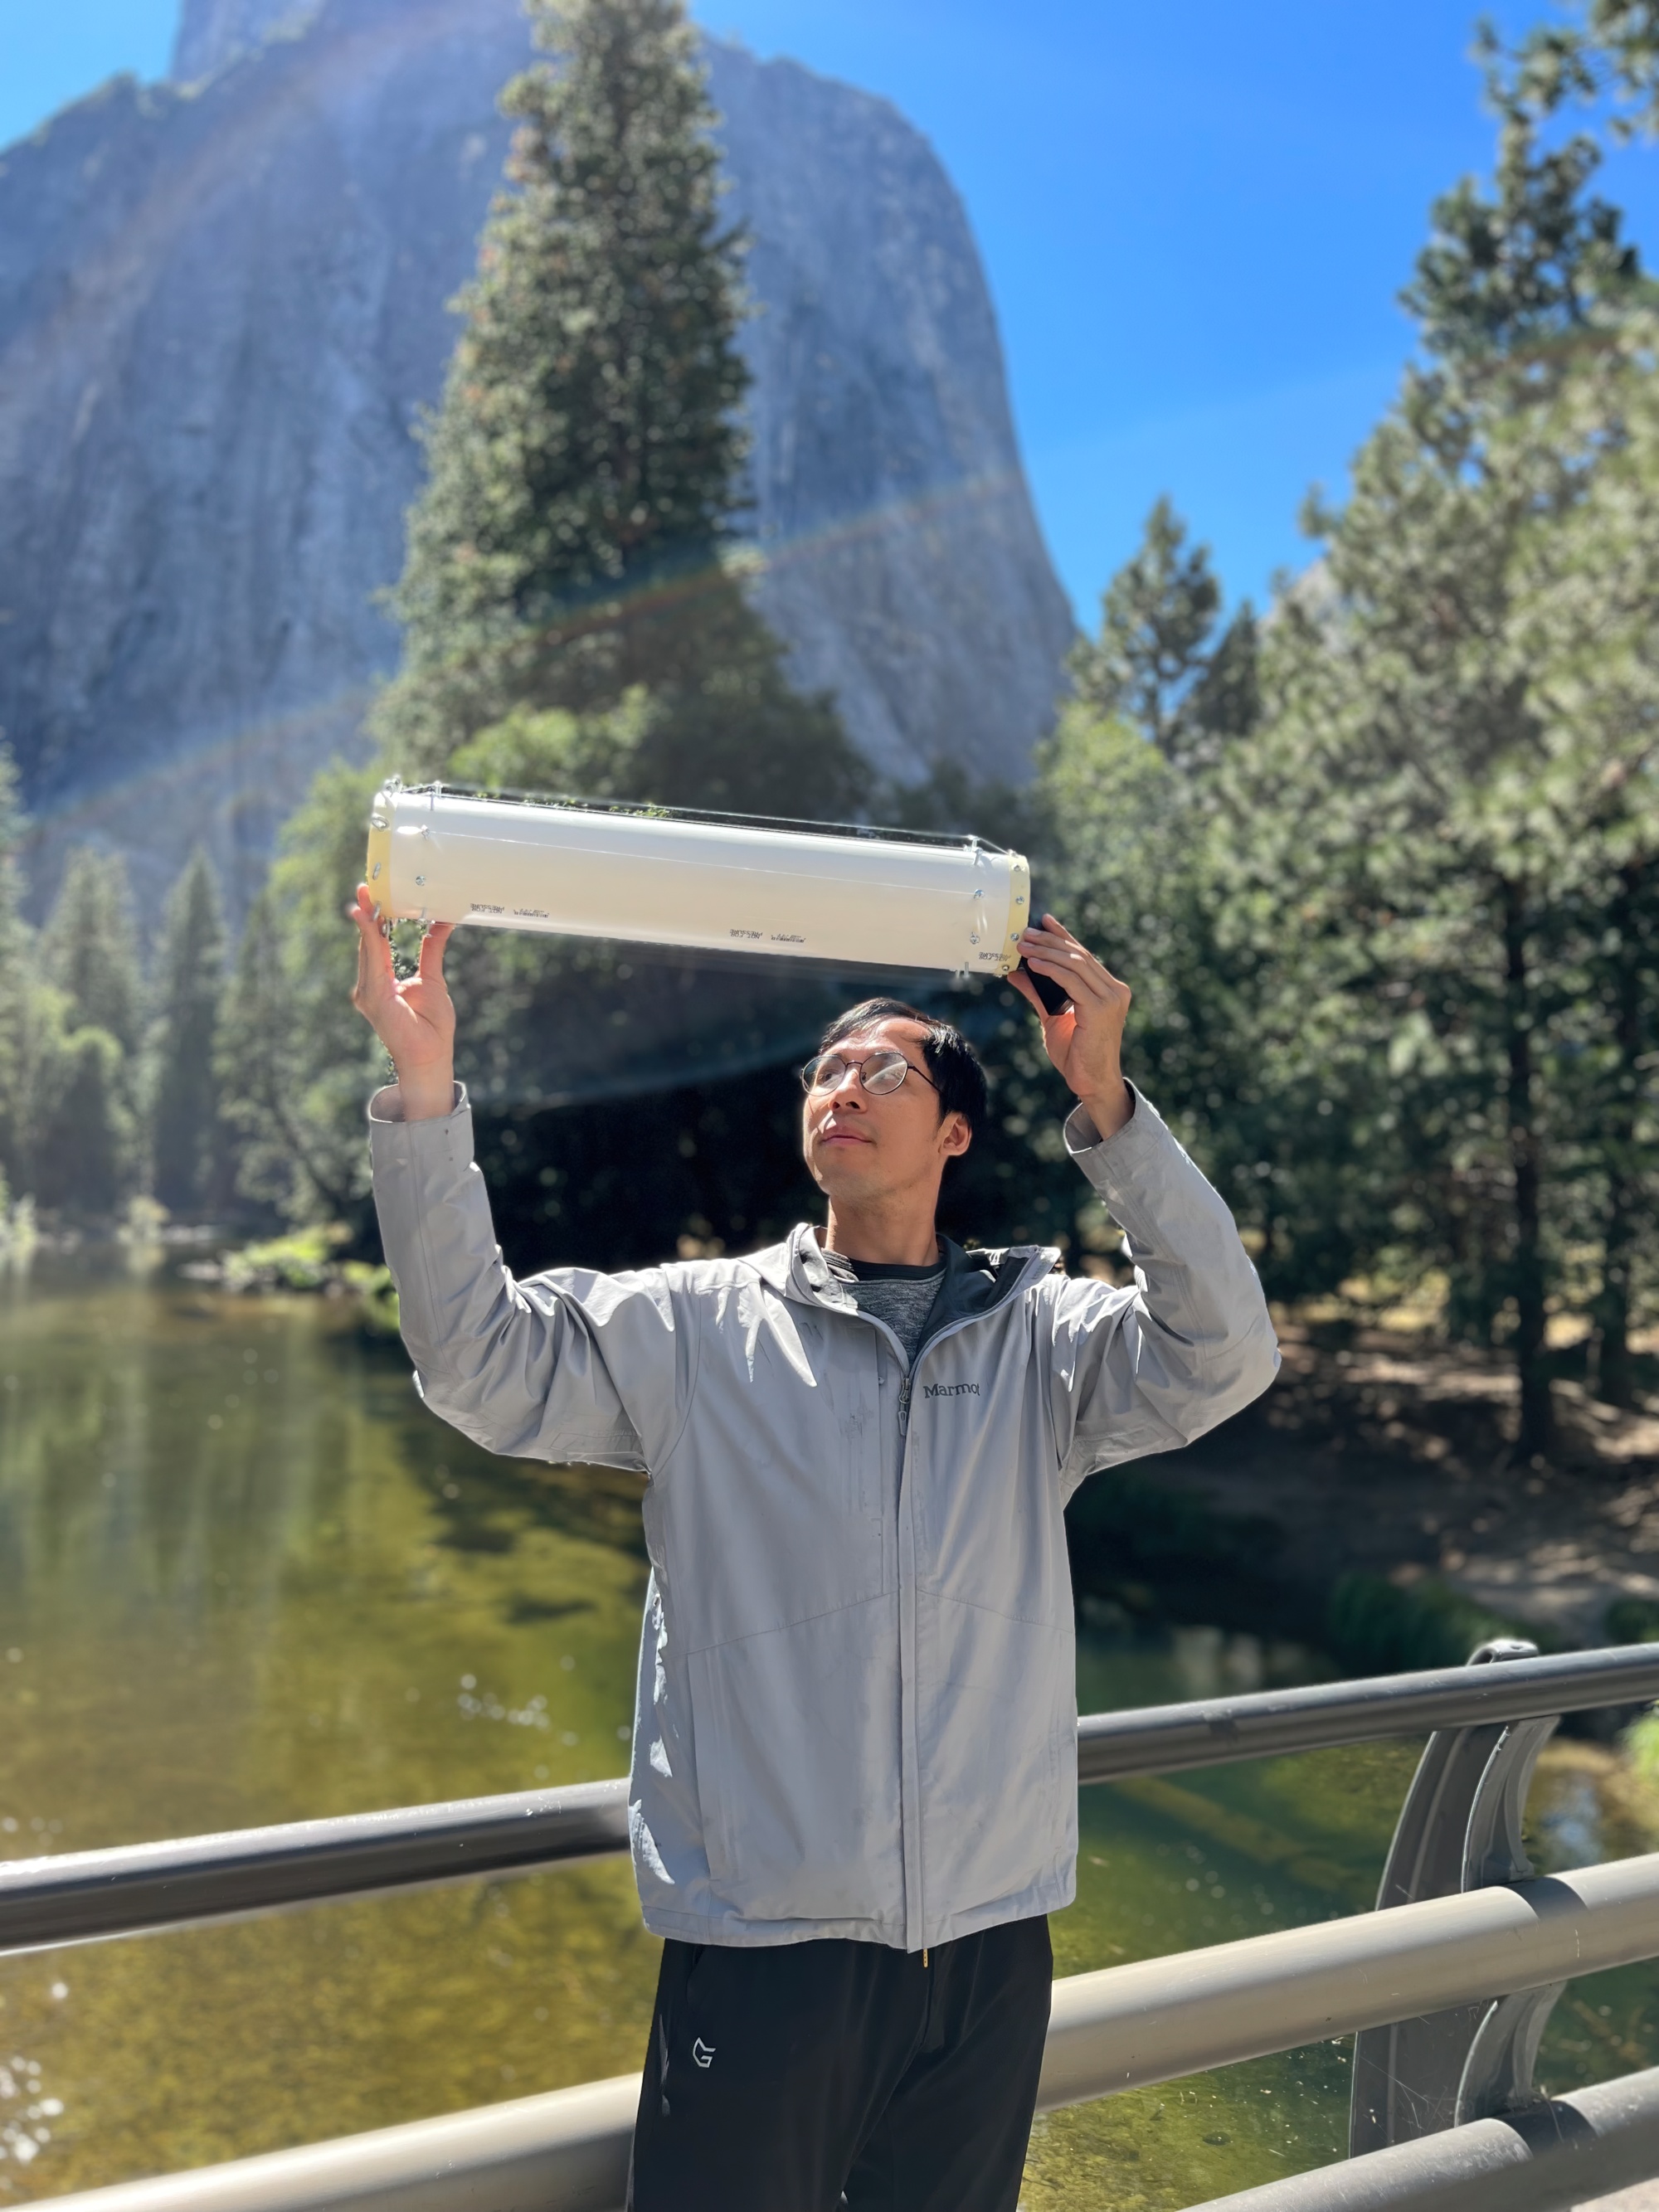 Testing Aeolian harp prototype at Yosemite